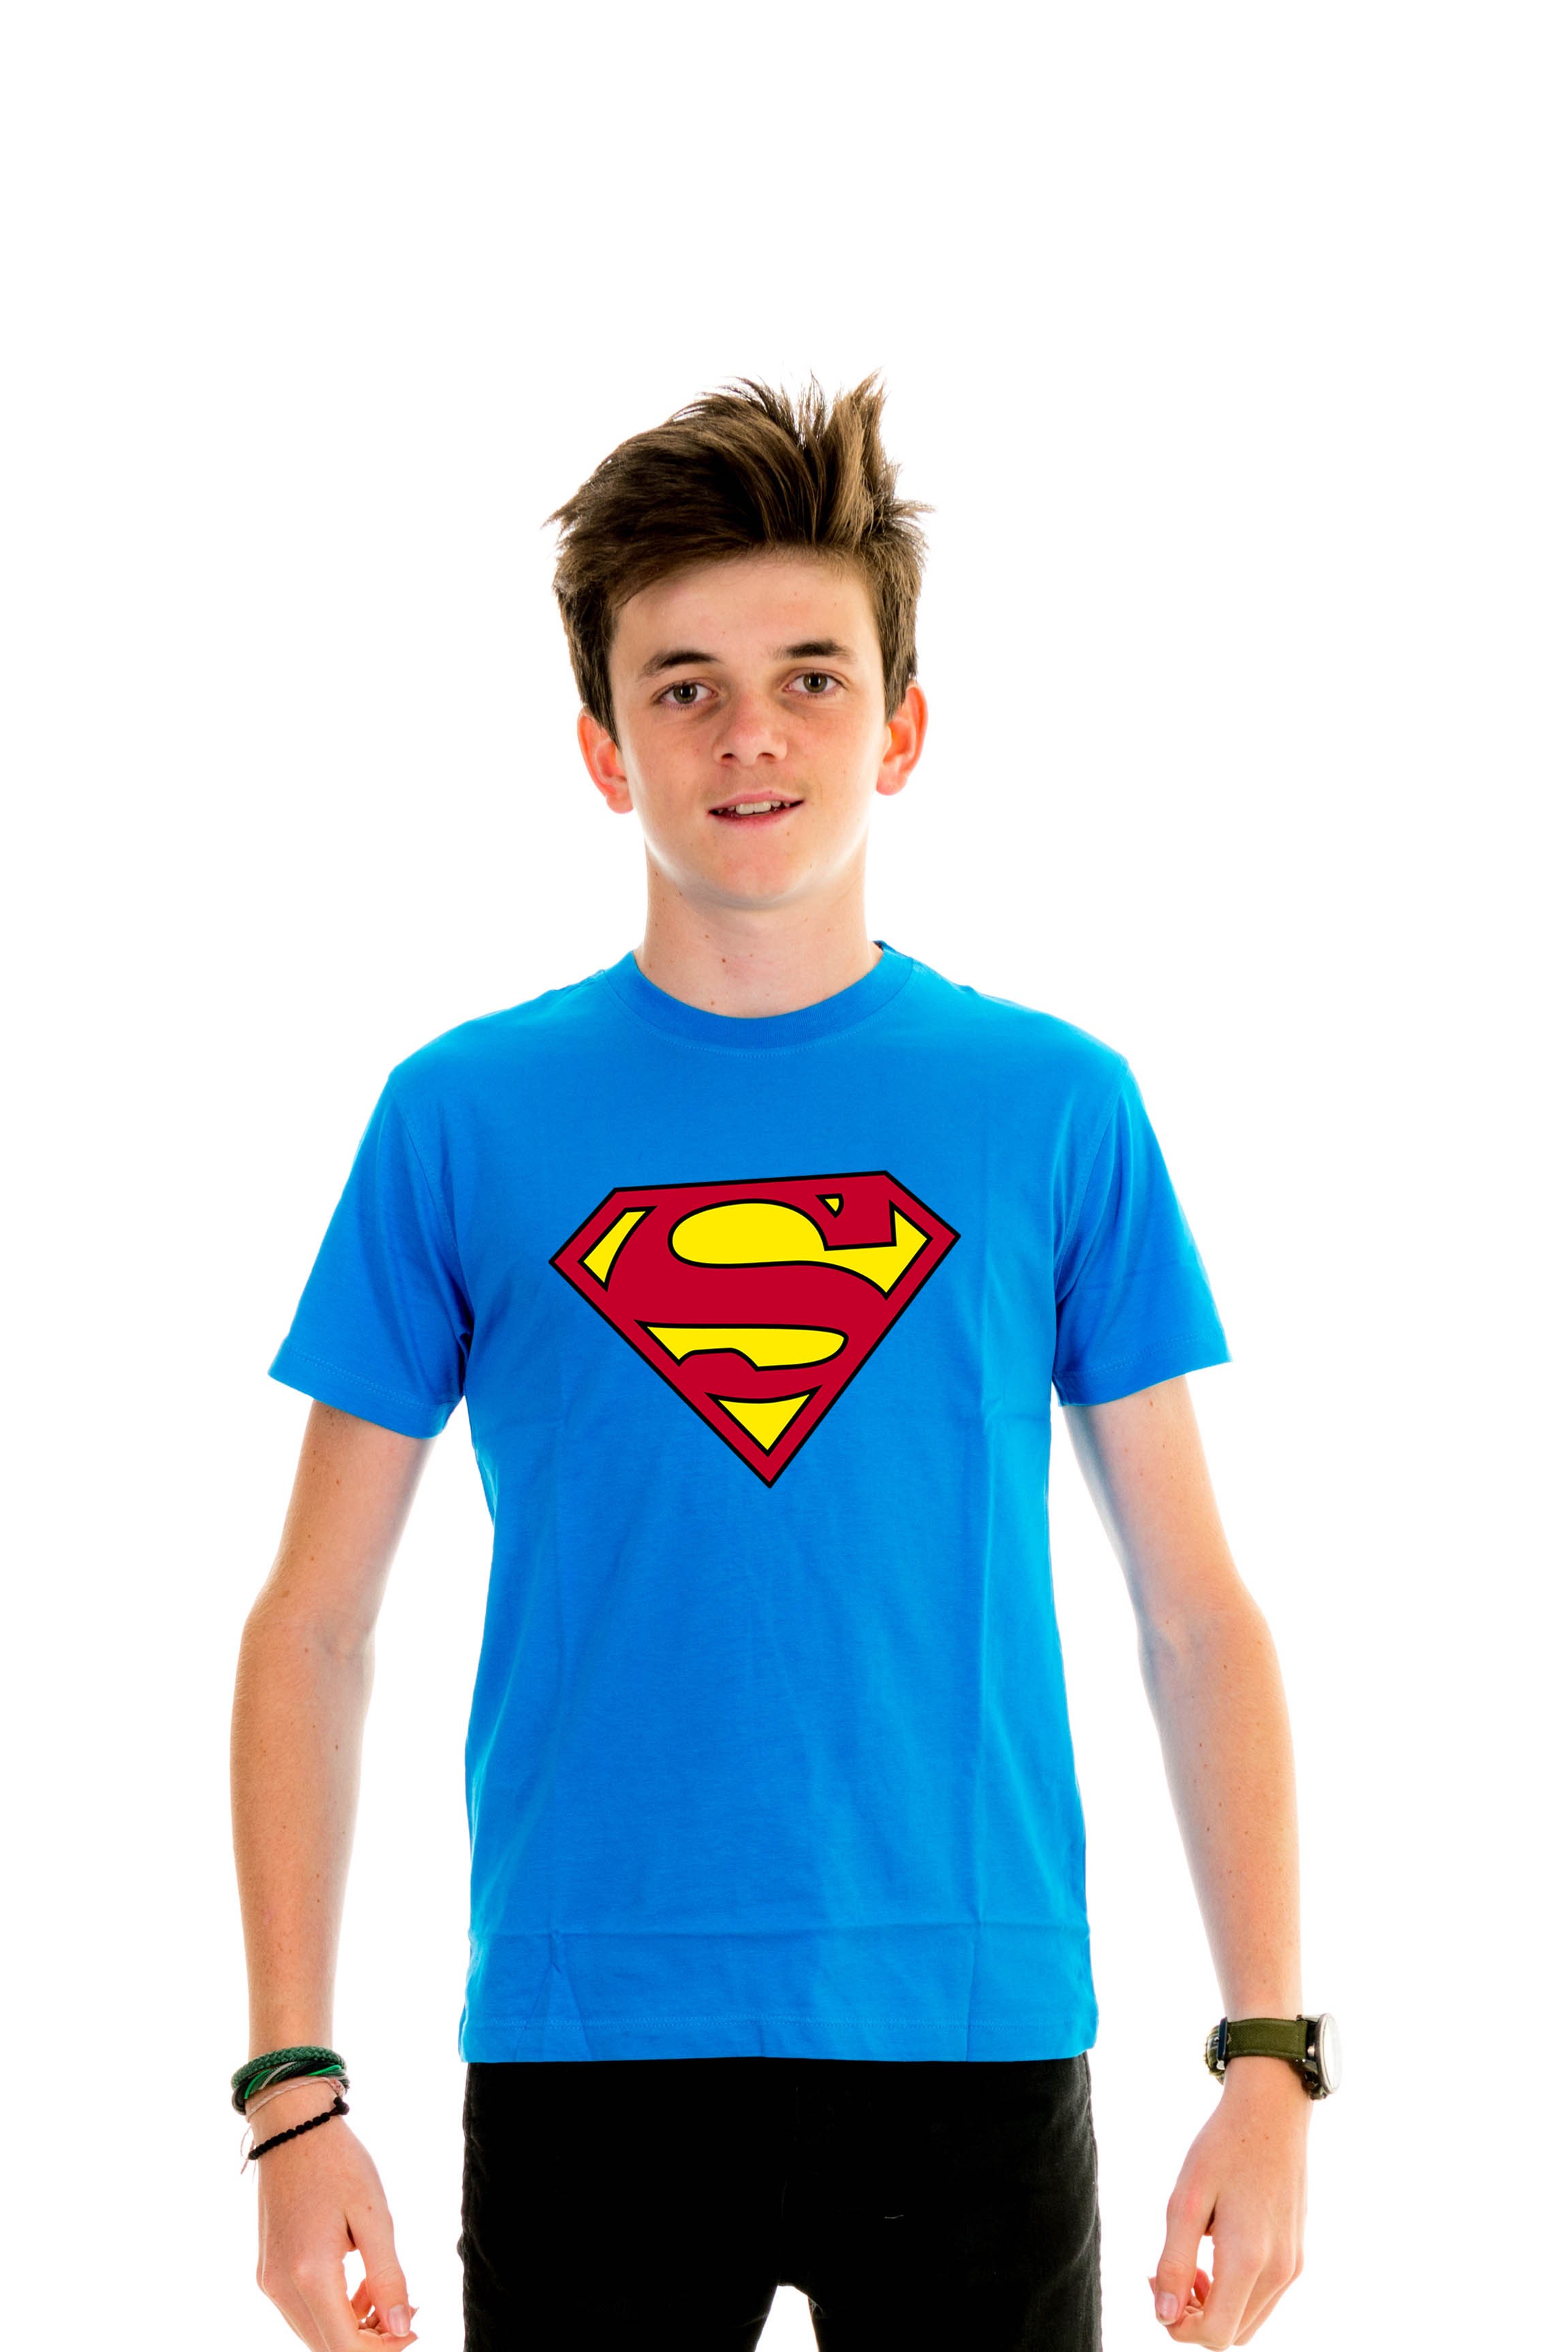 Tegne moderat Rød T-shirt Kid Superman - Culture - Popular themes - Designs